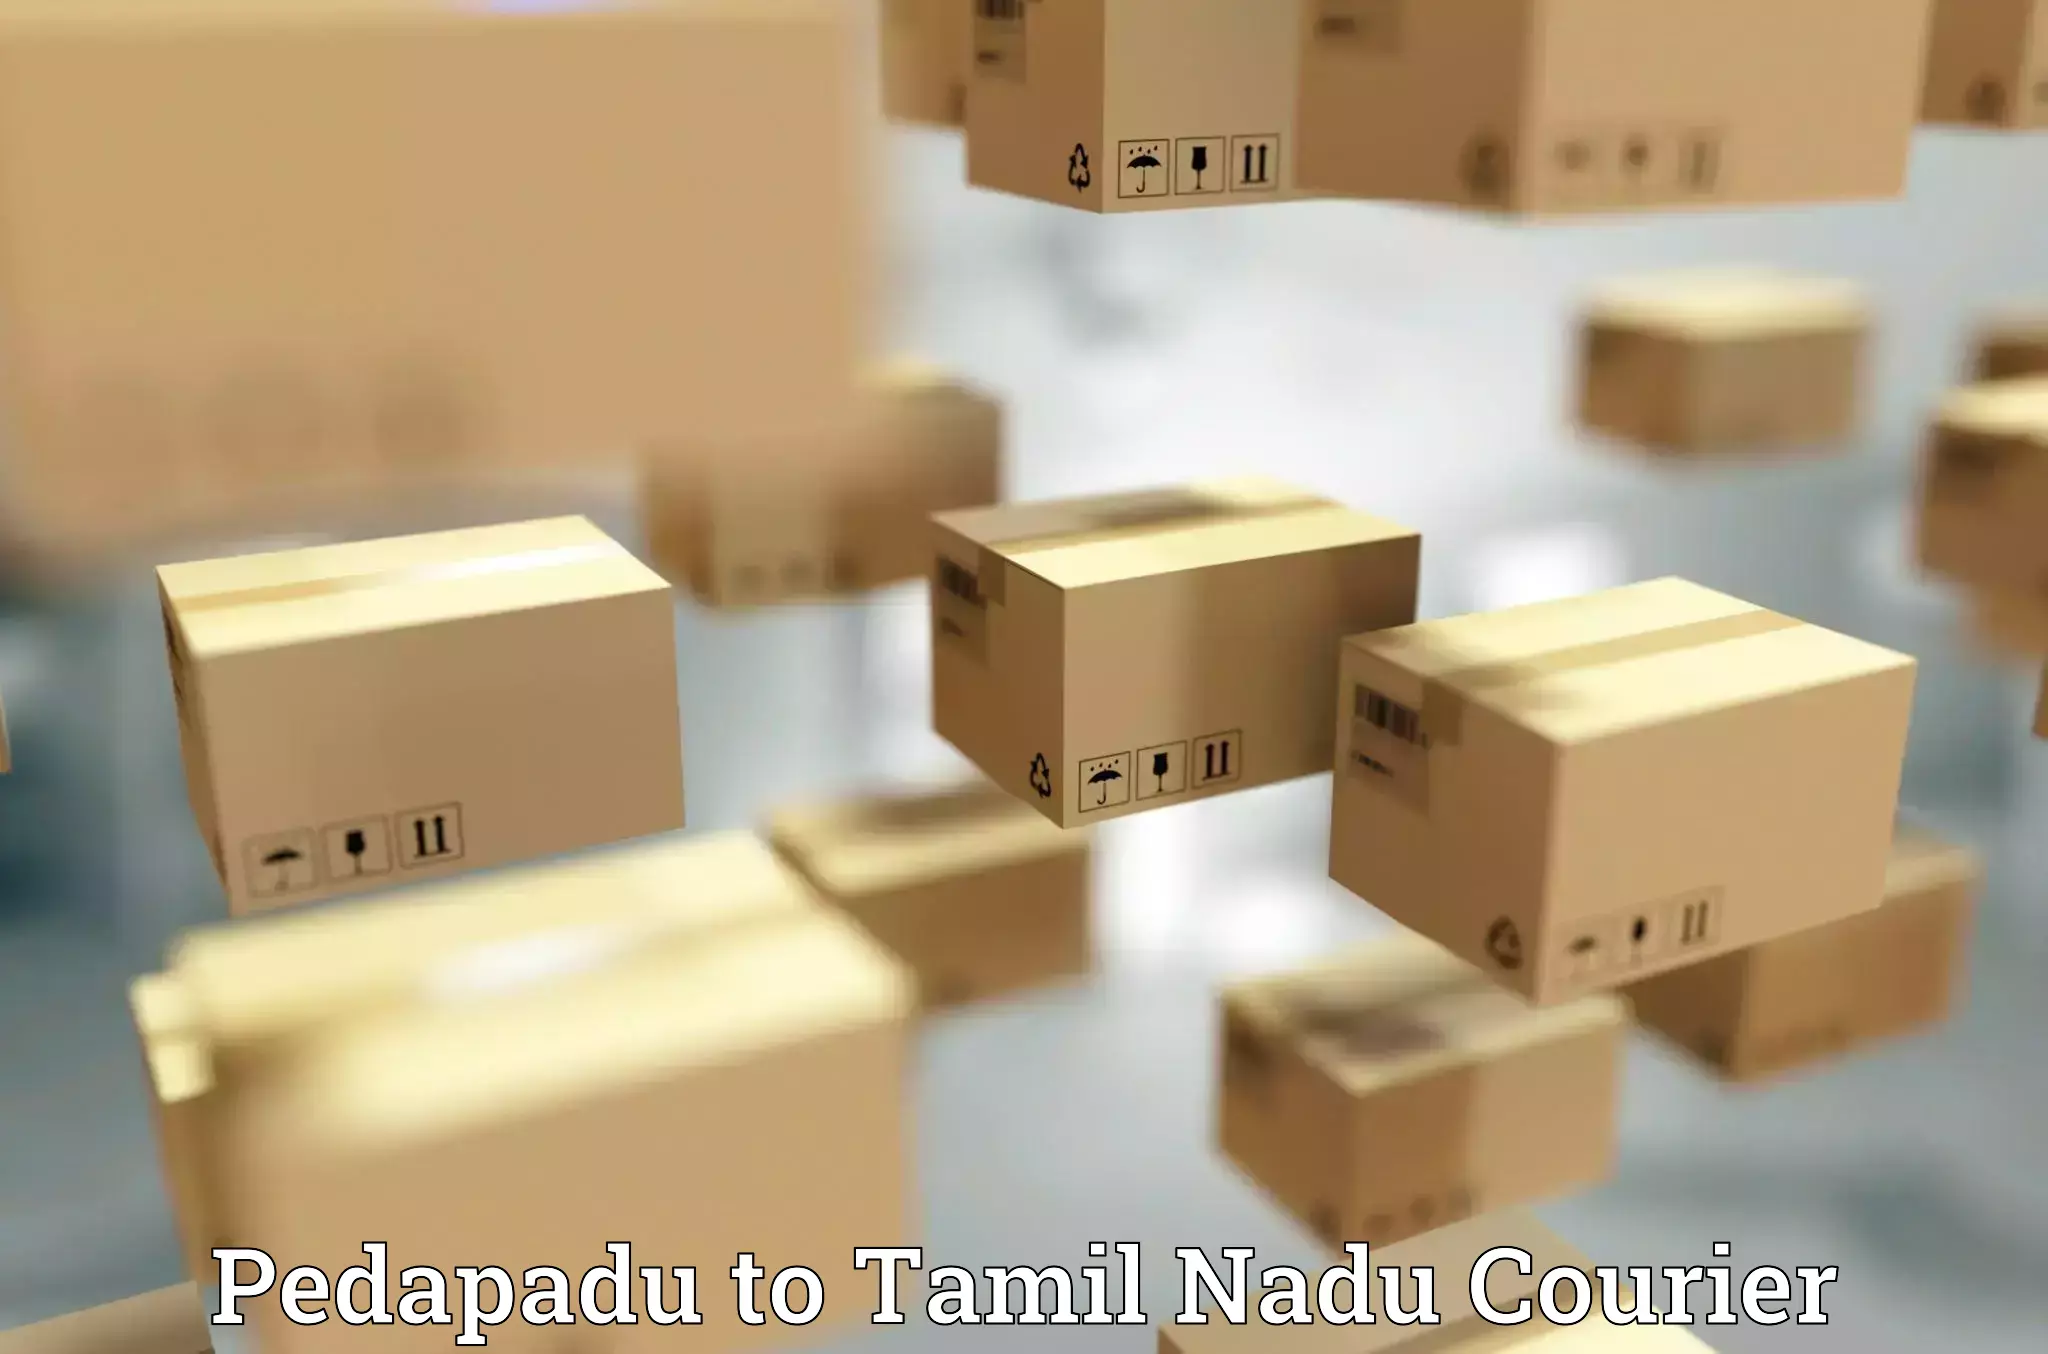 Multi-national courier services Pedapadu to Mettupalayam